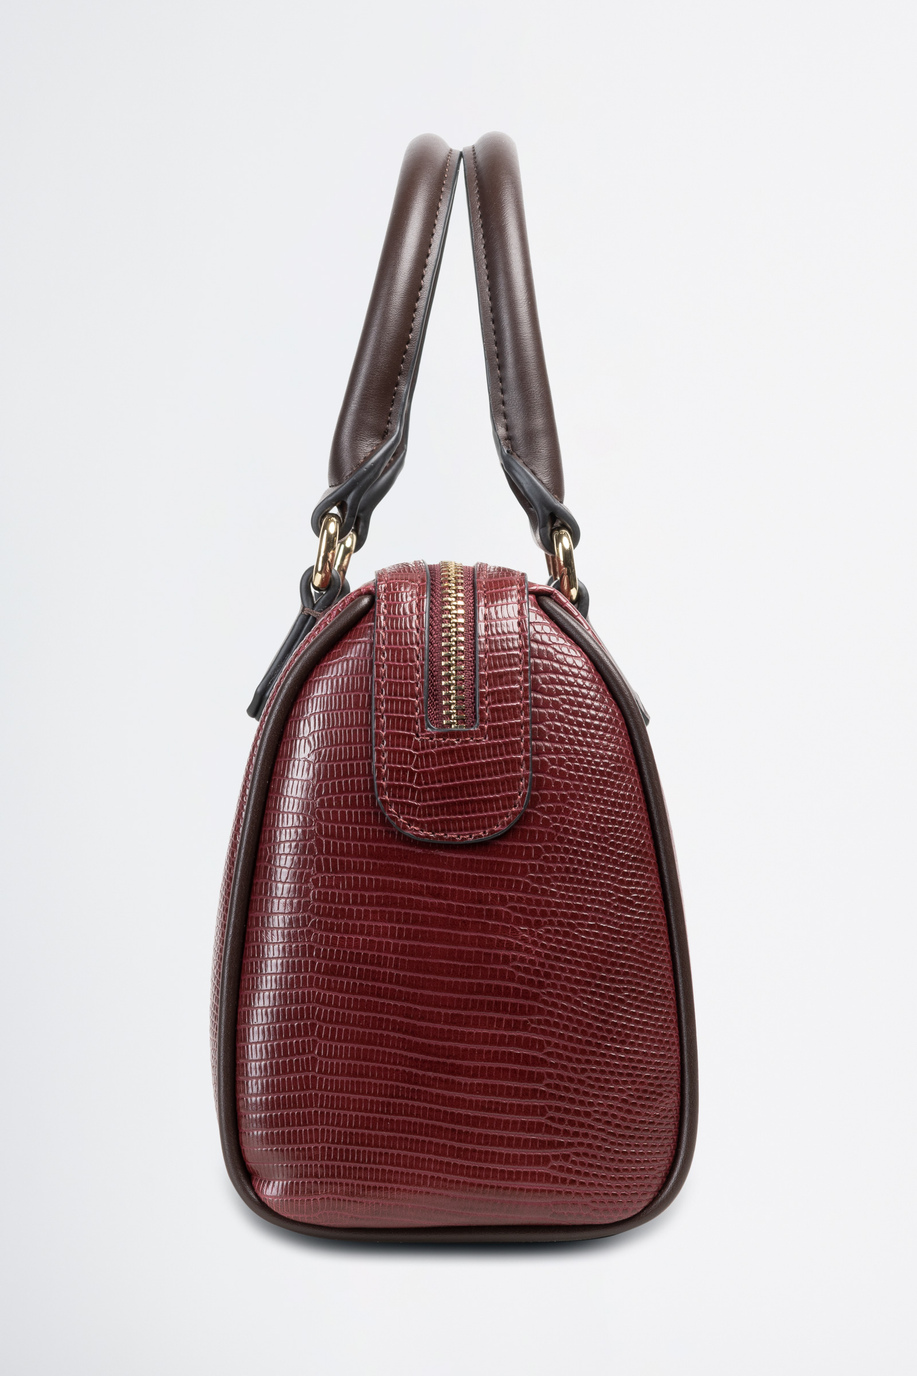 Double handle case in croco print - Bags | La Martina - Official Online Shop